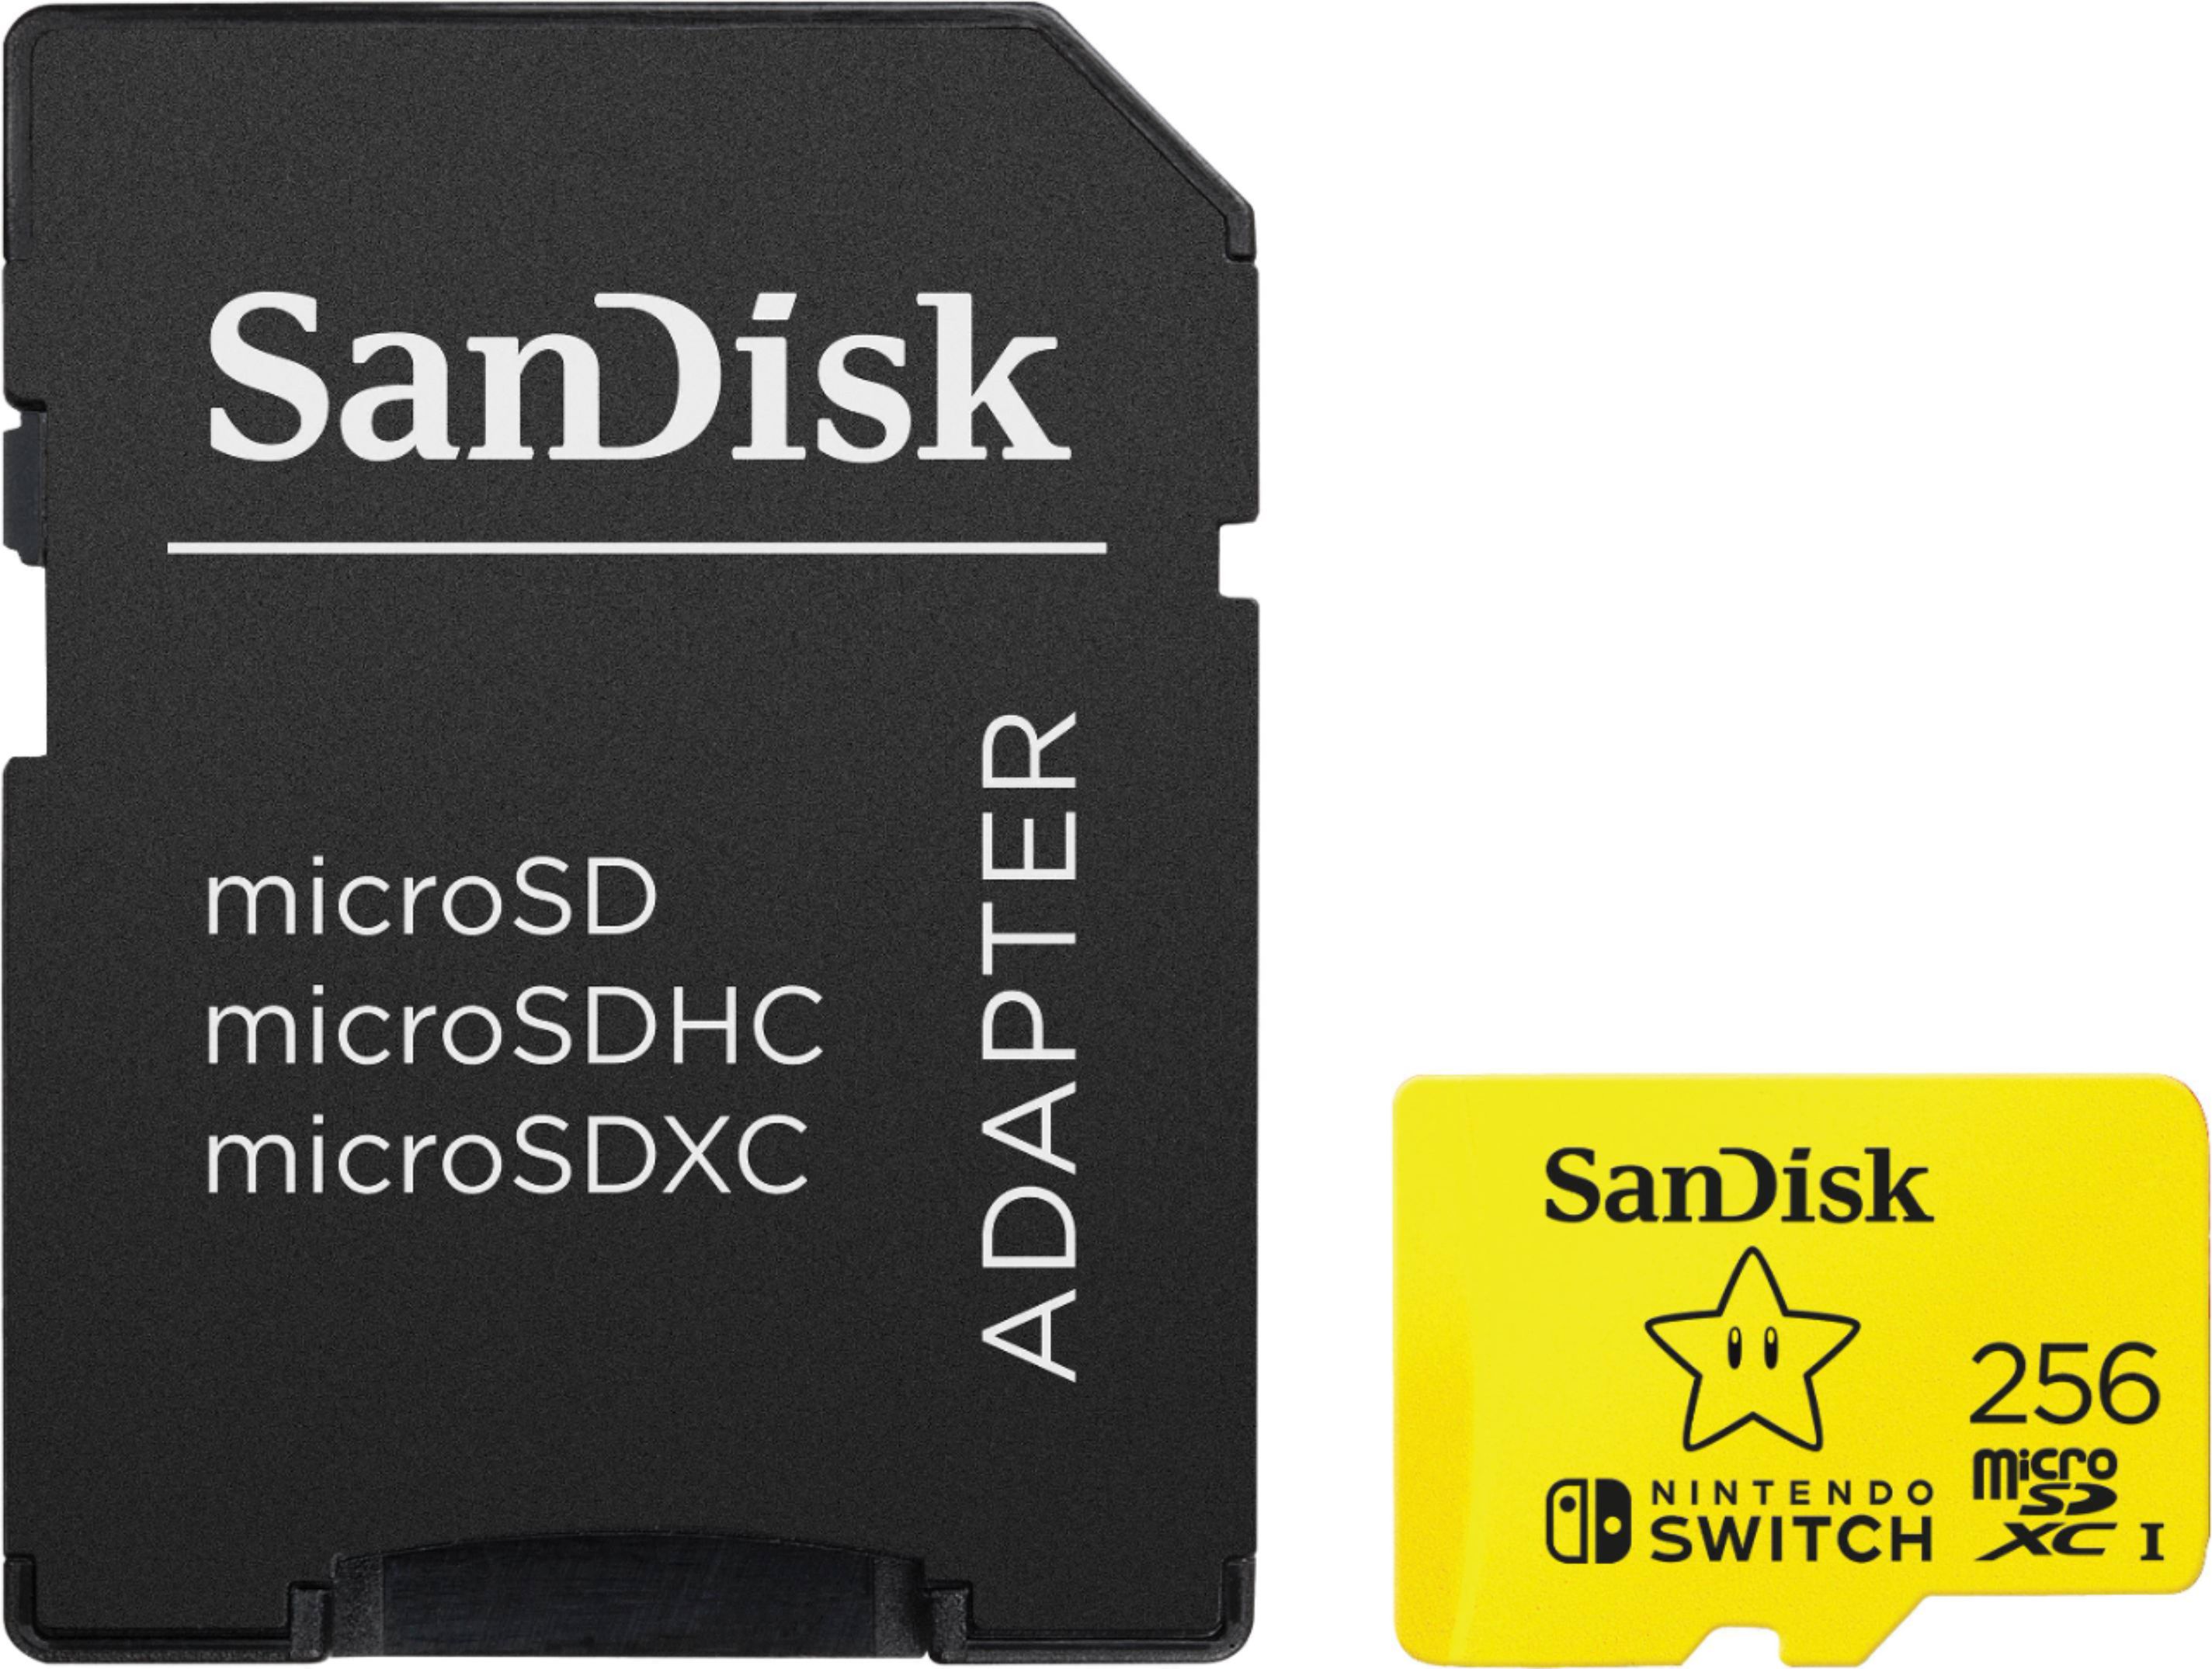 sandisk 256gb switch